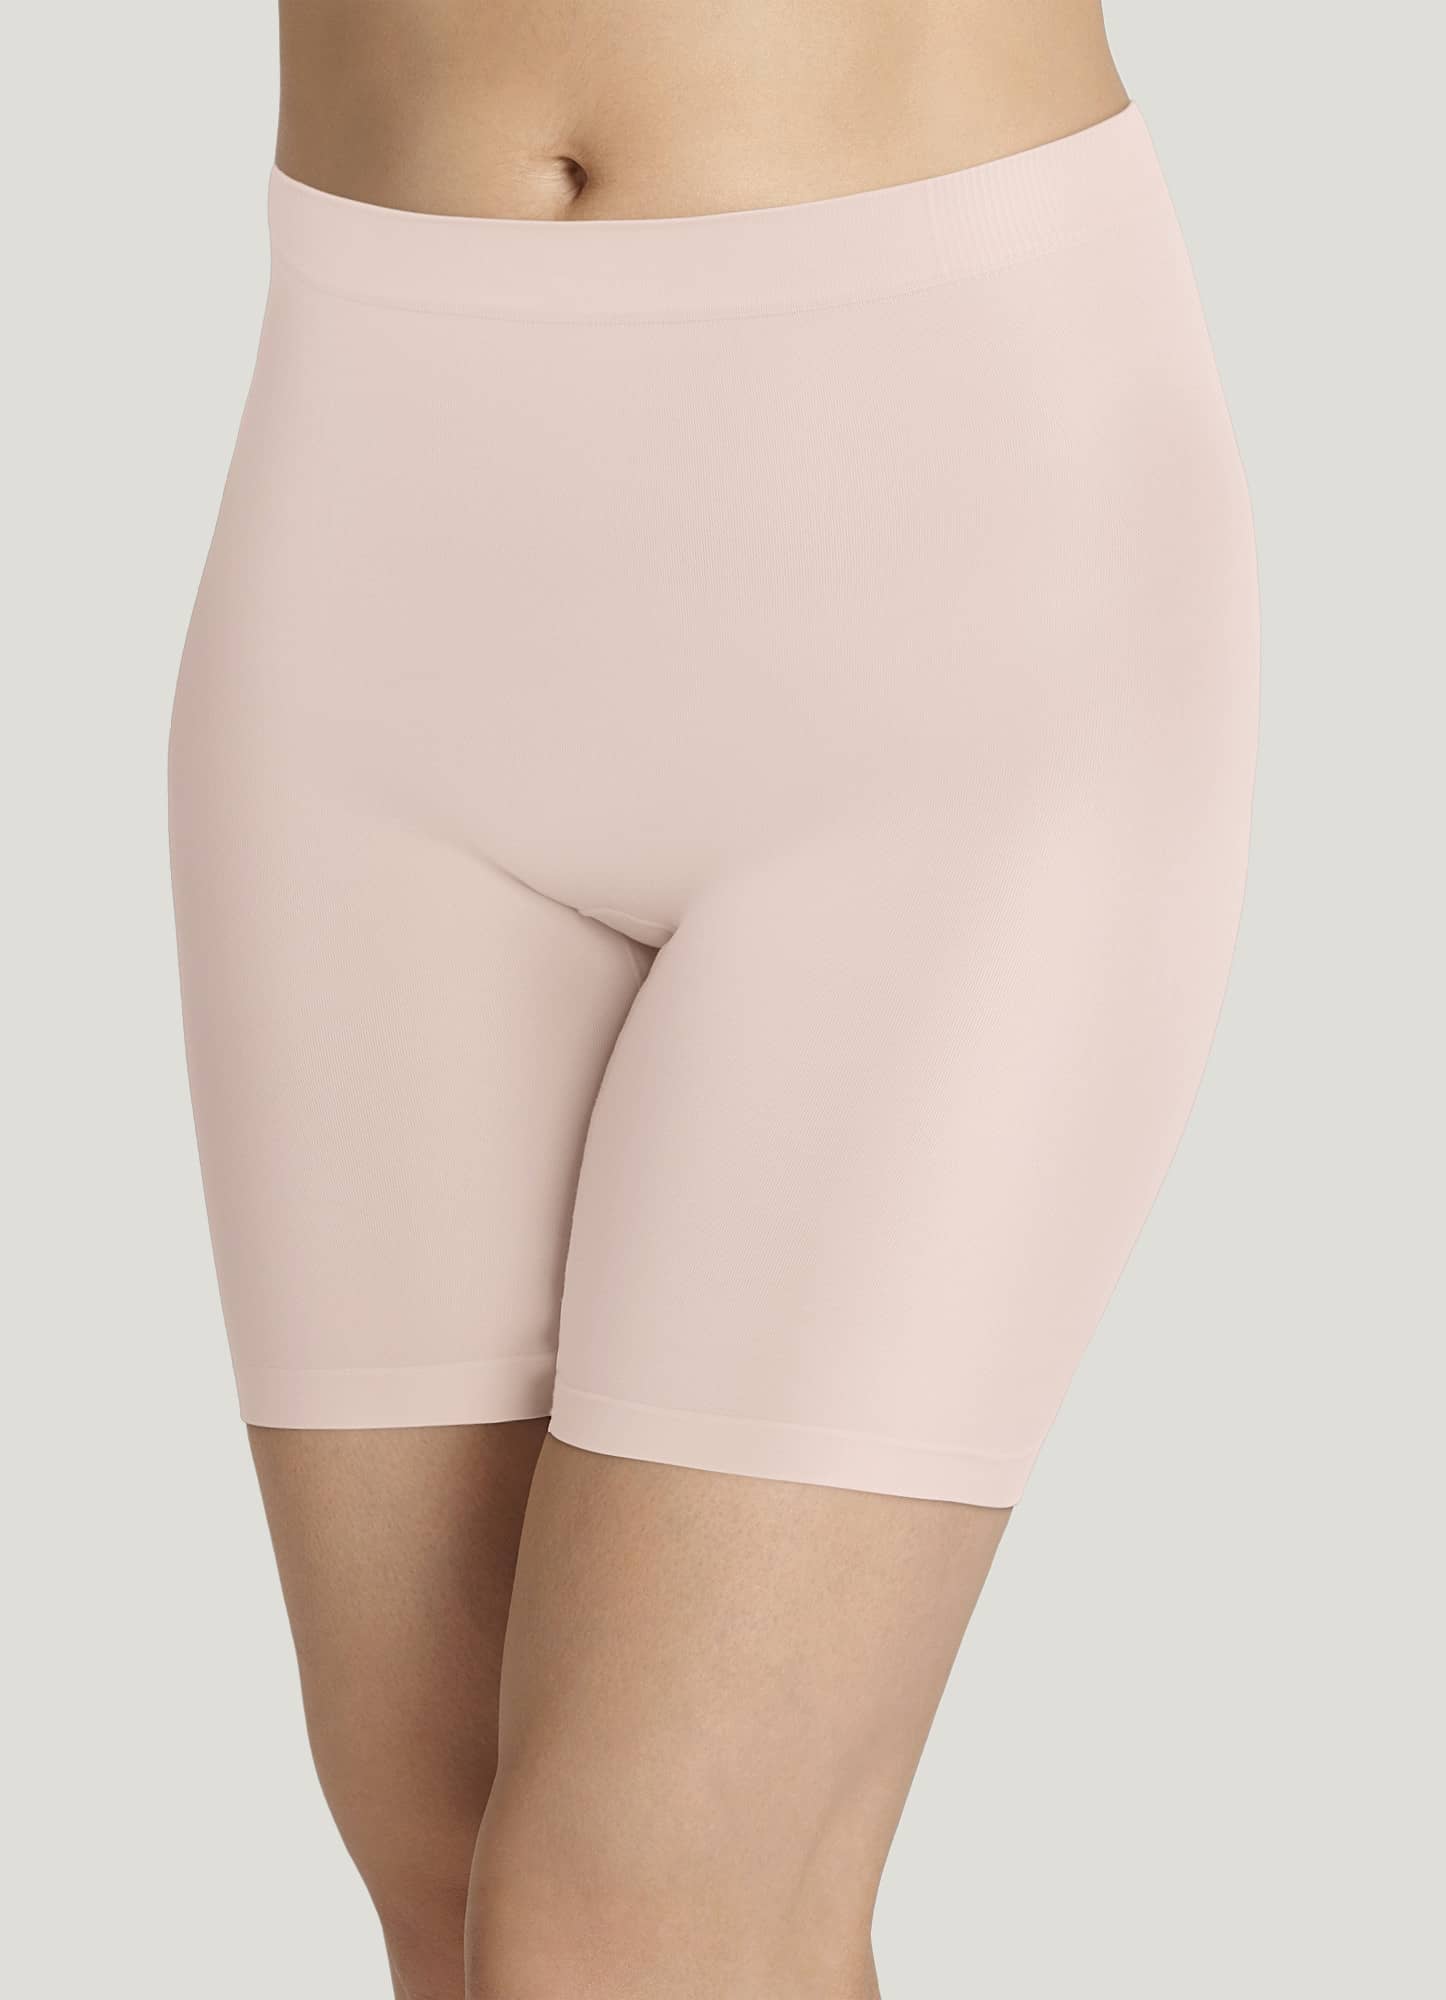 Jockey Smoothing Slip-Shorts, Women's Size XXL, Beige NEW MSRP $20